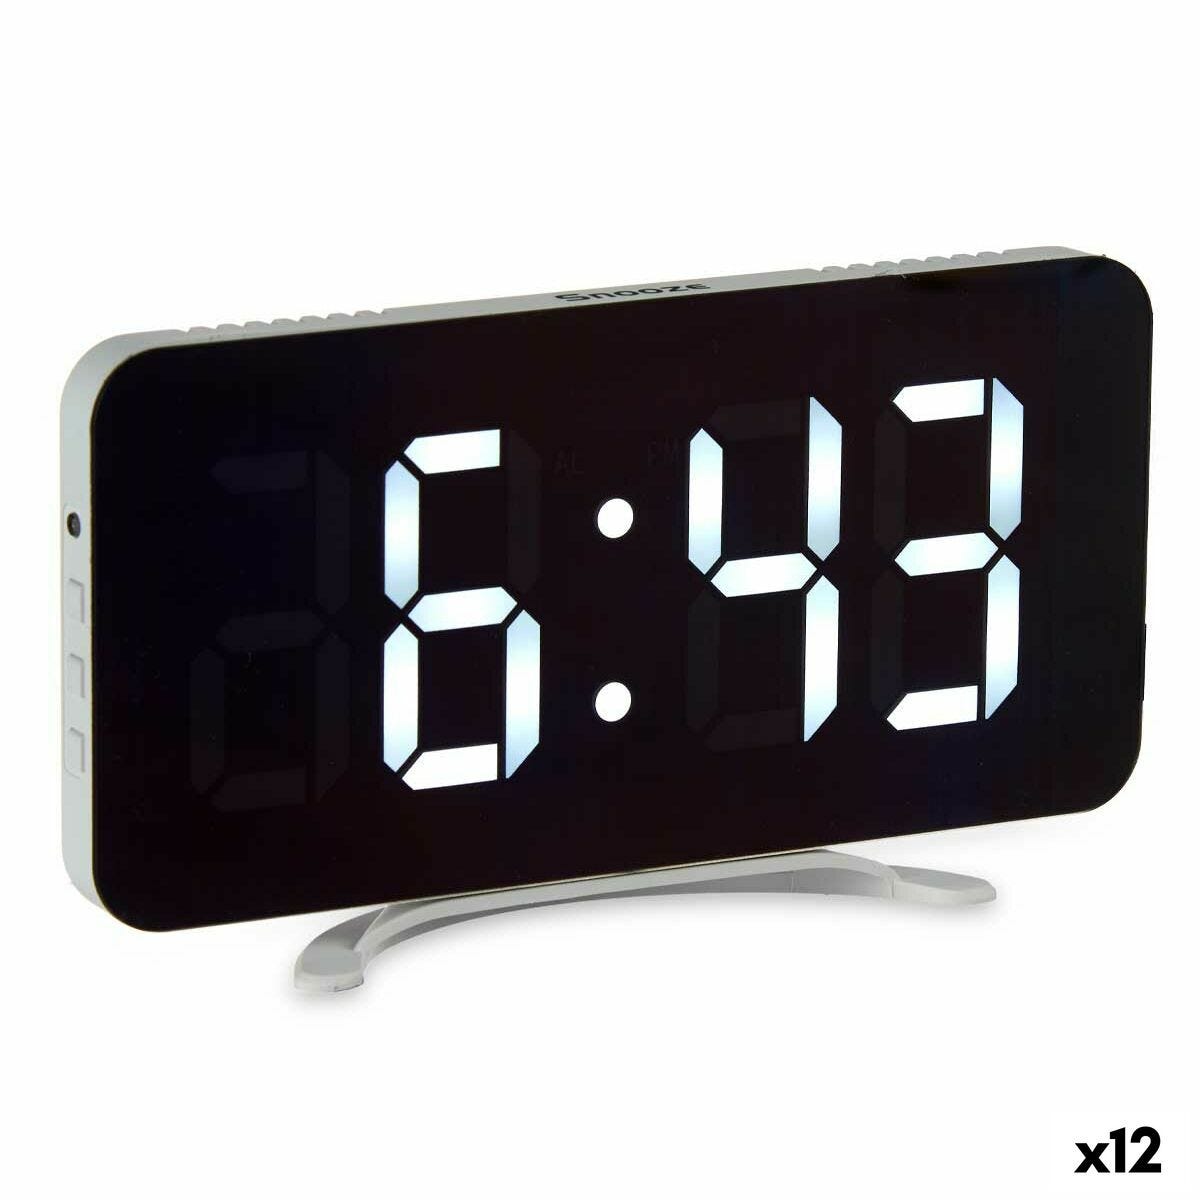 Orologio digitale da tavolo ALBA radiocontrollato LCD 20x3x15 cm Bianco  HORLCDNEO